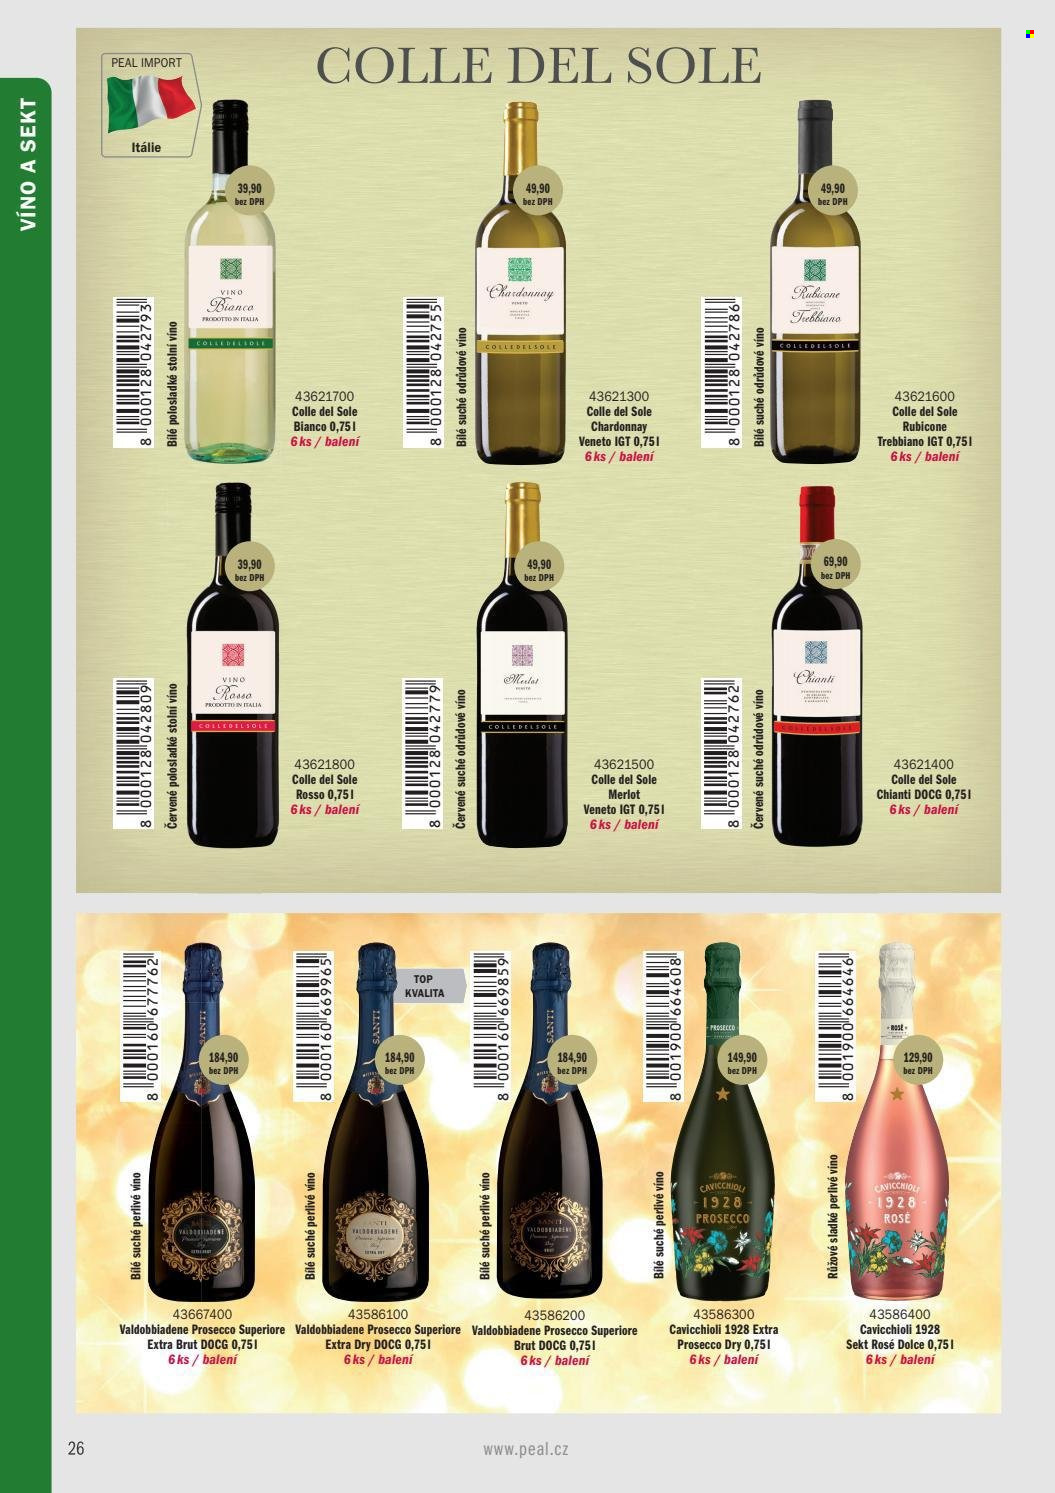 Leták PEAL - Produkty v akci - alkohol, červené víno, sekt, Chardonnay, Chianti, Merlot, Prosecco, víno, šumivé víno, Brut, perlivé víno, Valdobbiadene. Strana 16.